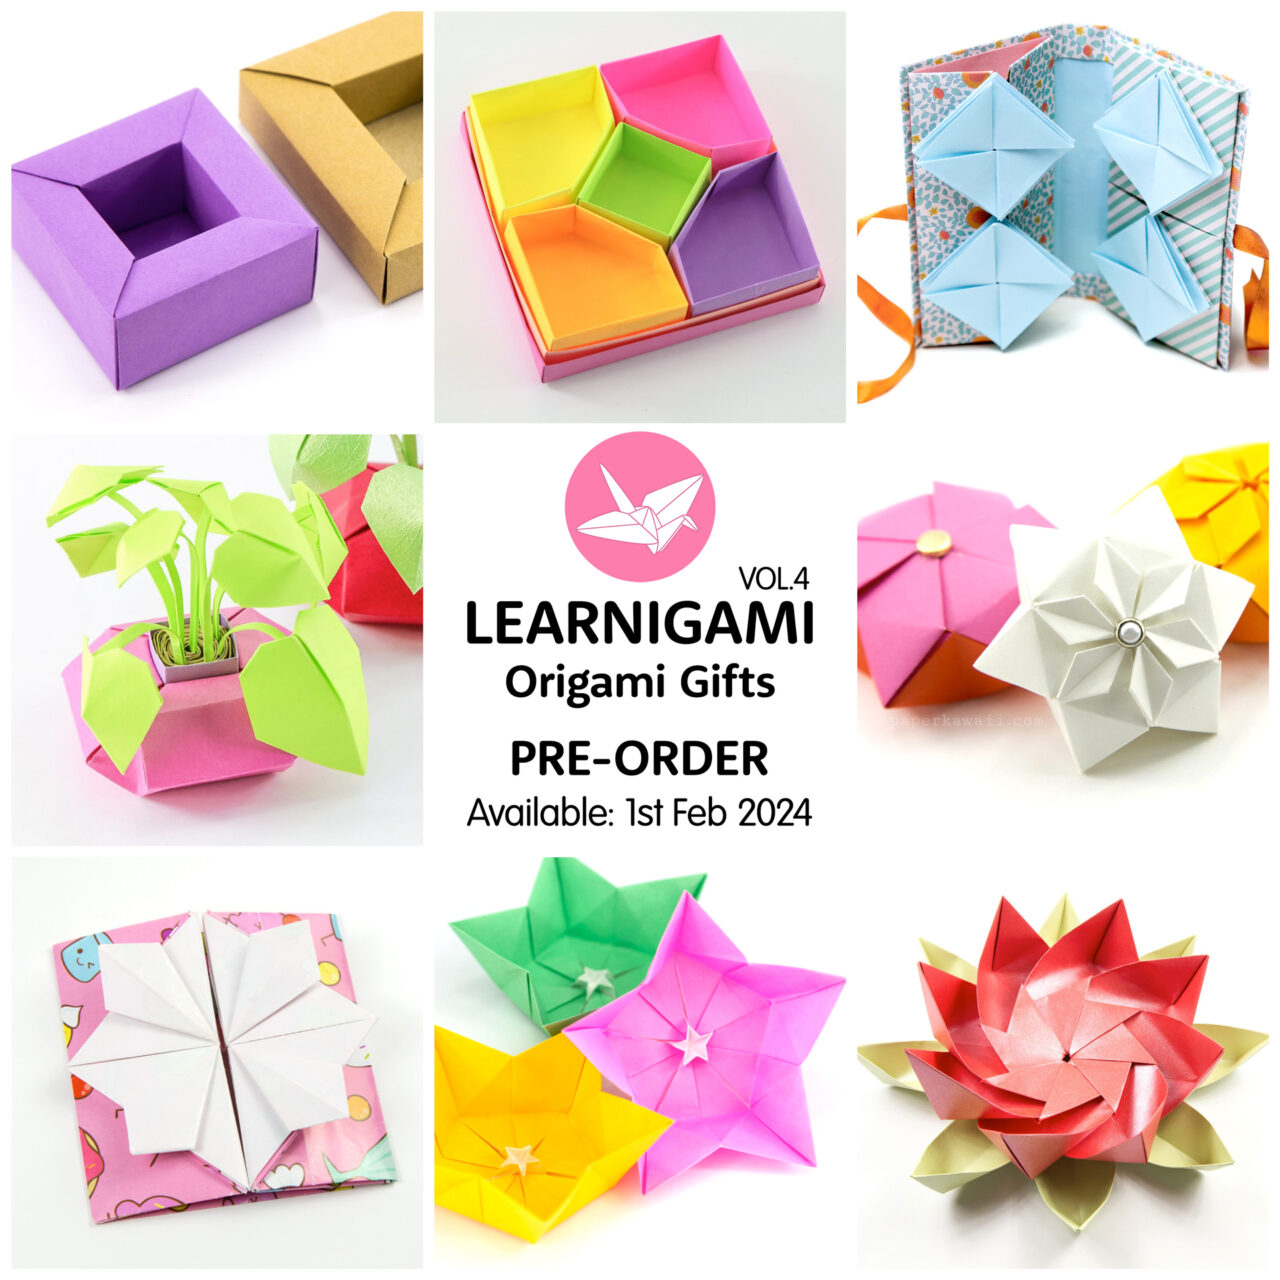 Origami Woven Paper Hearts Tutorial - Paper Kawaii